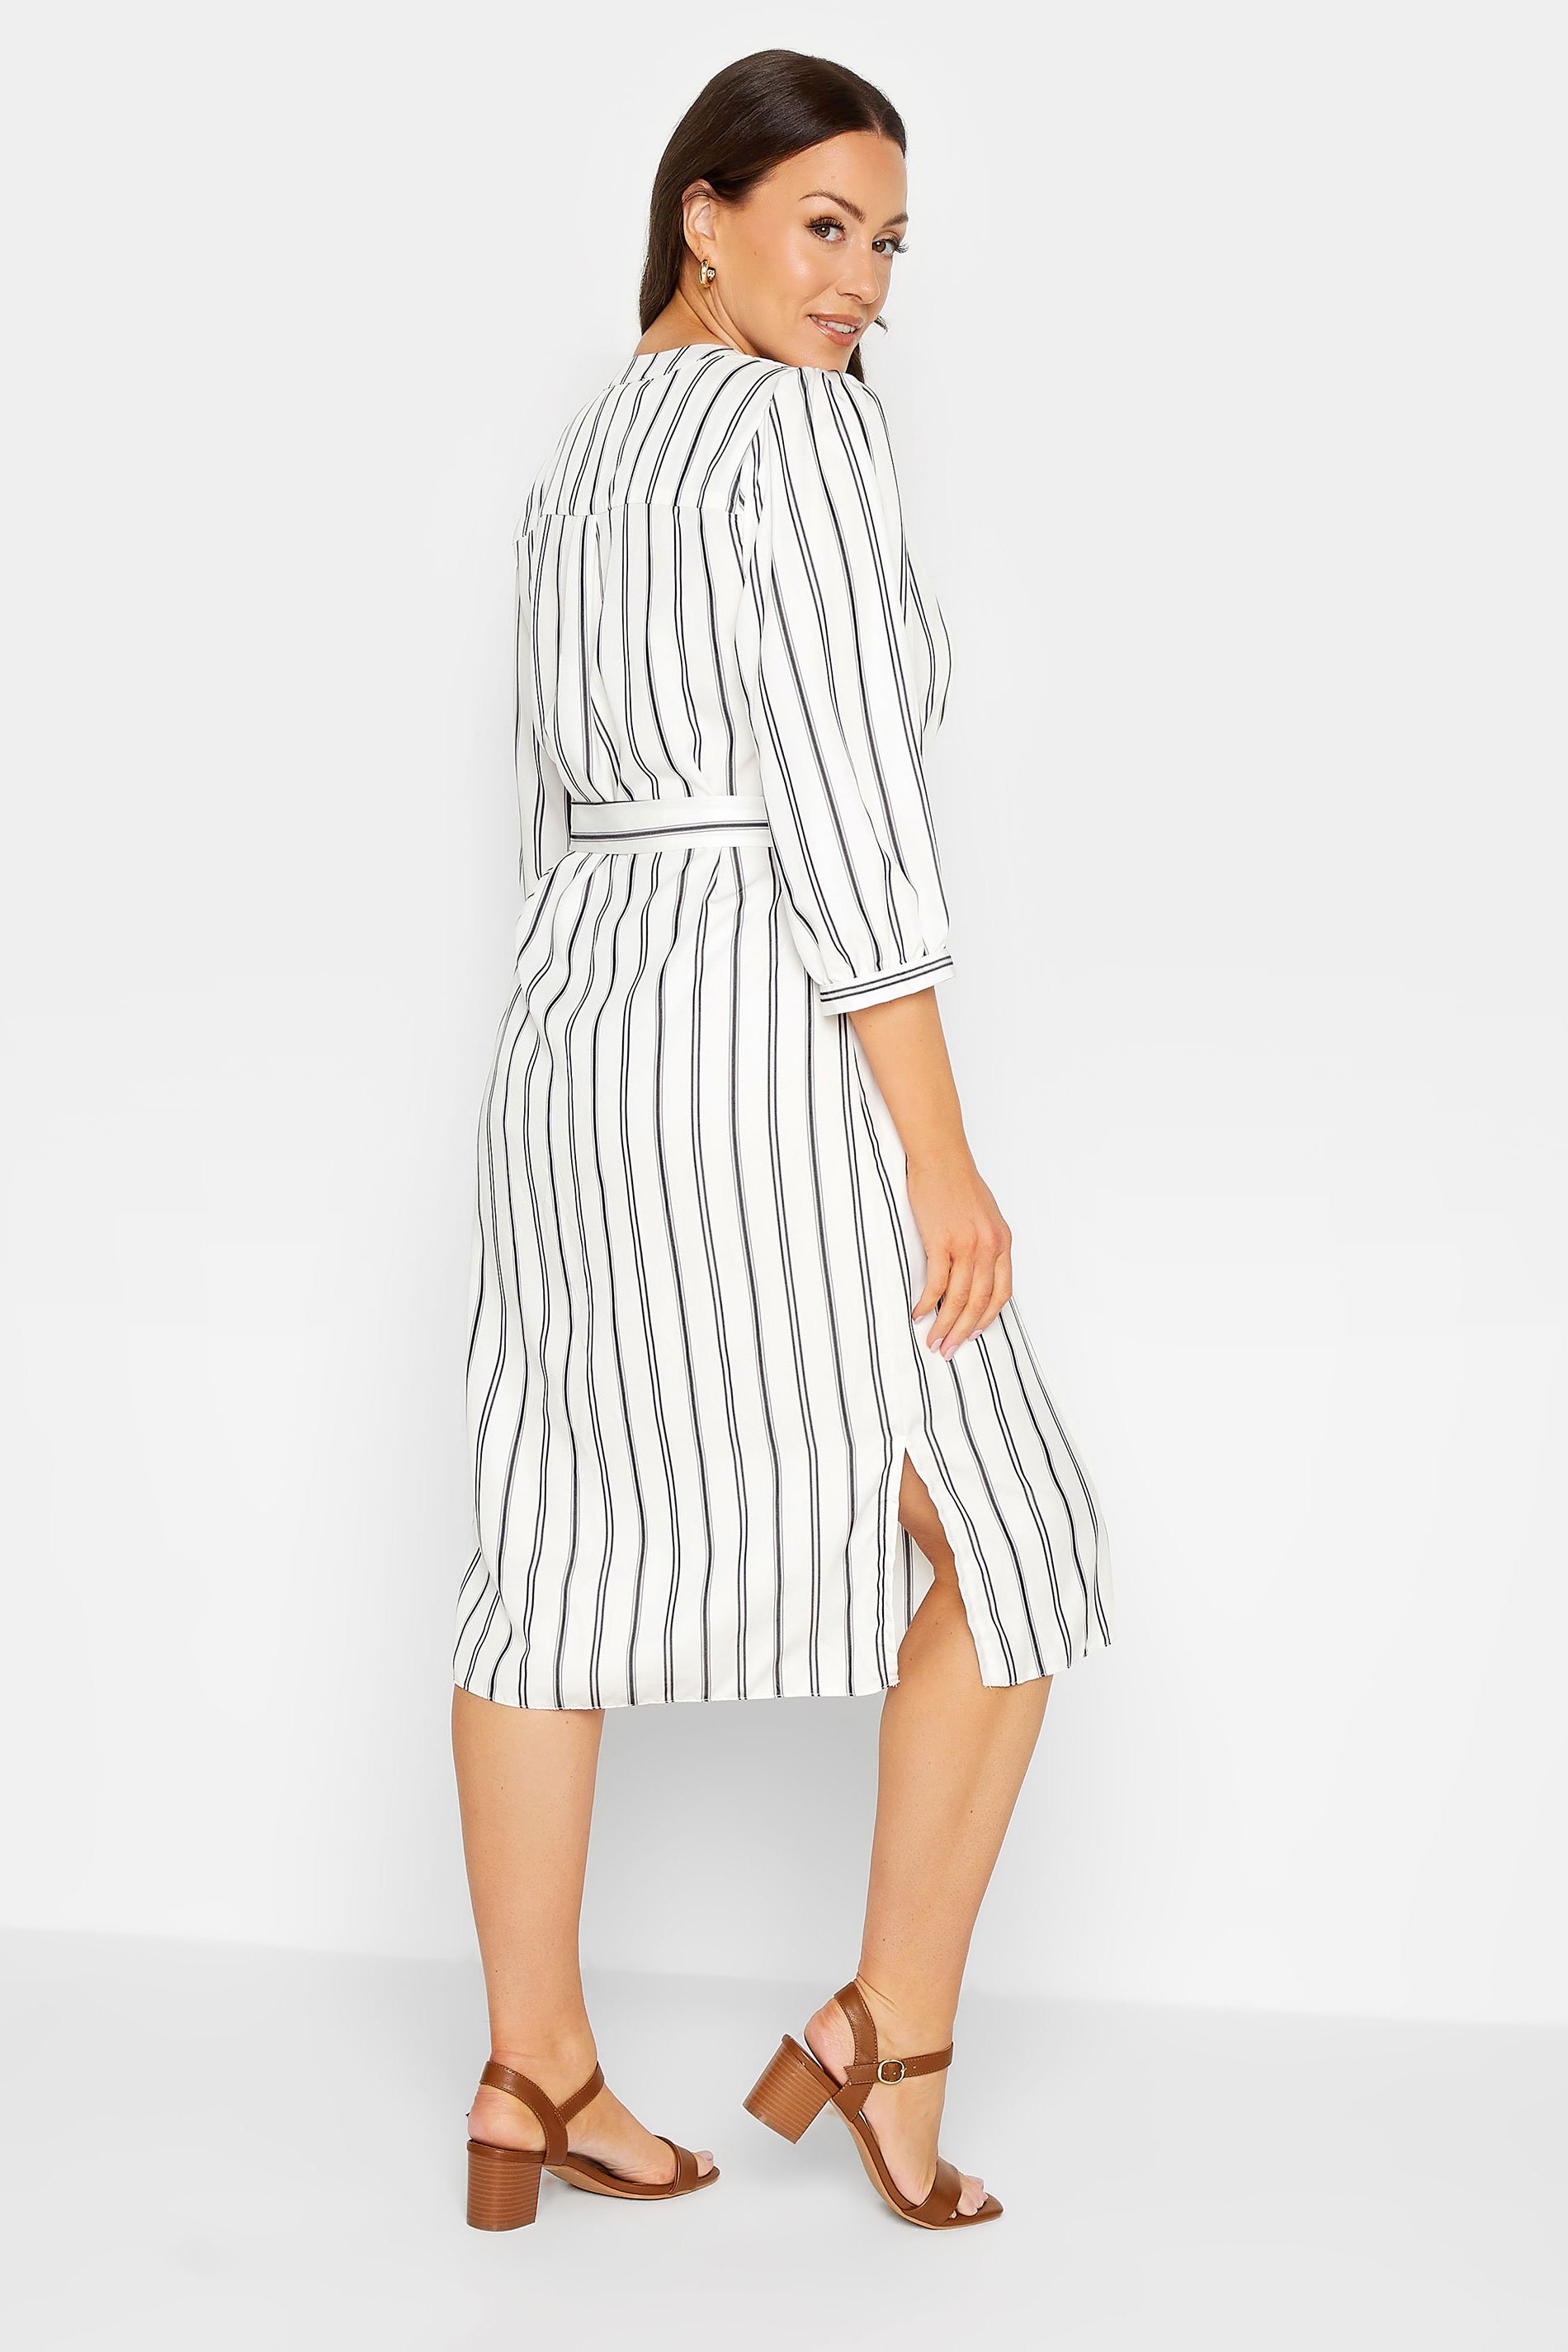 M&Co White Stripe Print Tie Waist Tunic Dress | M&Co 3